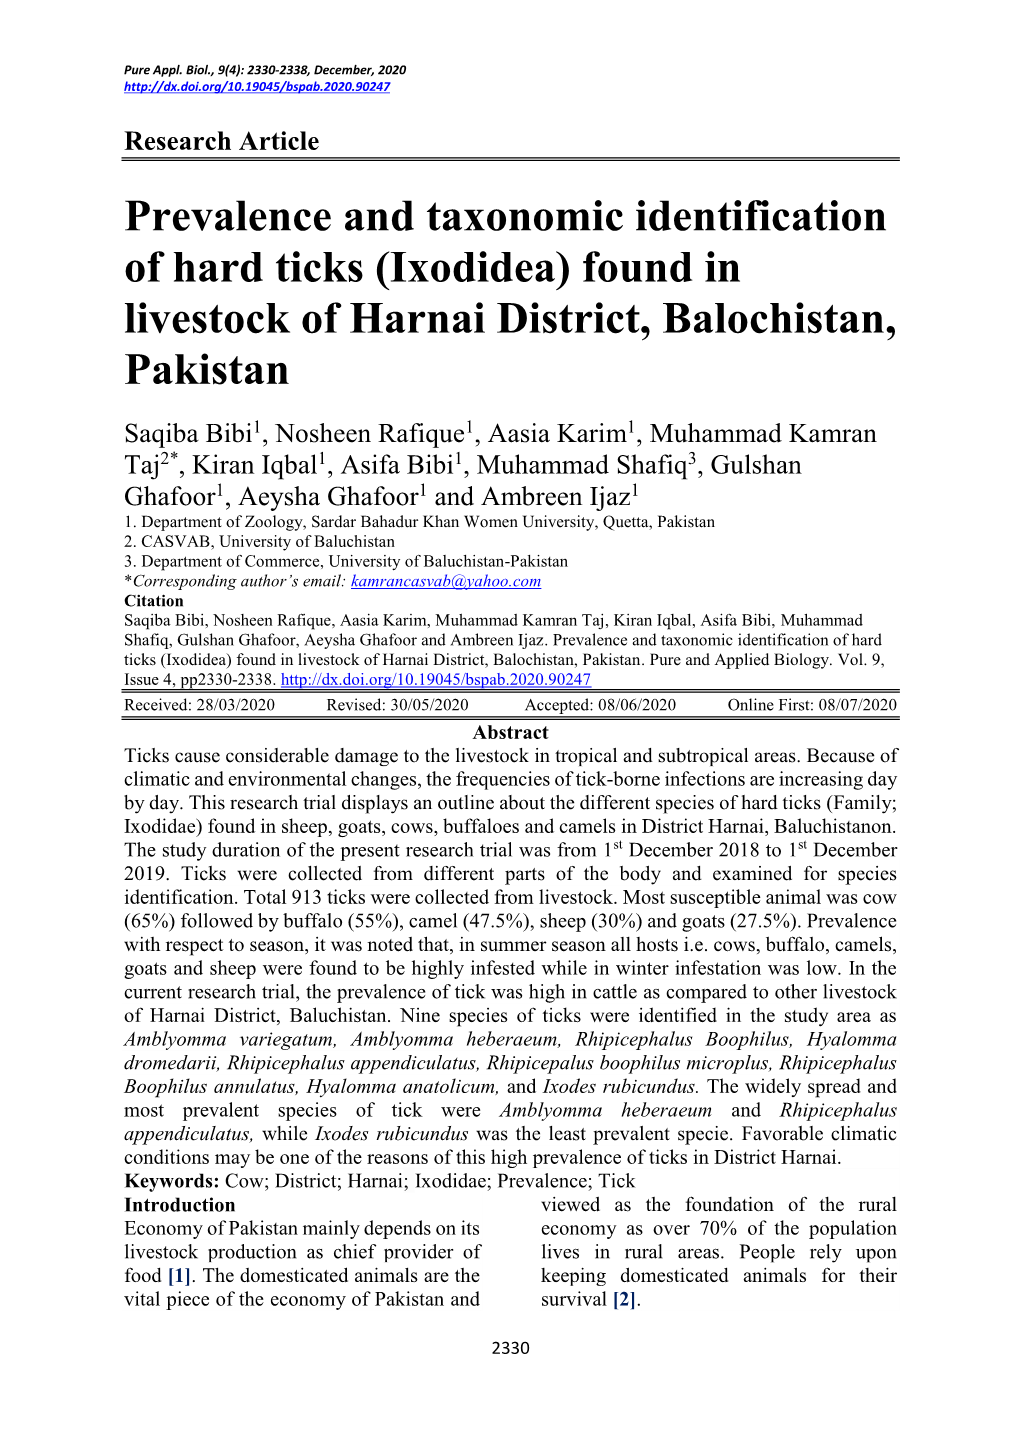 Prevalence and Taxonomic Identification of Hard Ticks (Ixodidea) Found in Livestock of Harnai District, Balochistan, Pakistan